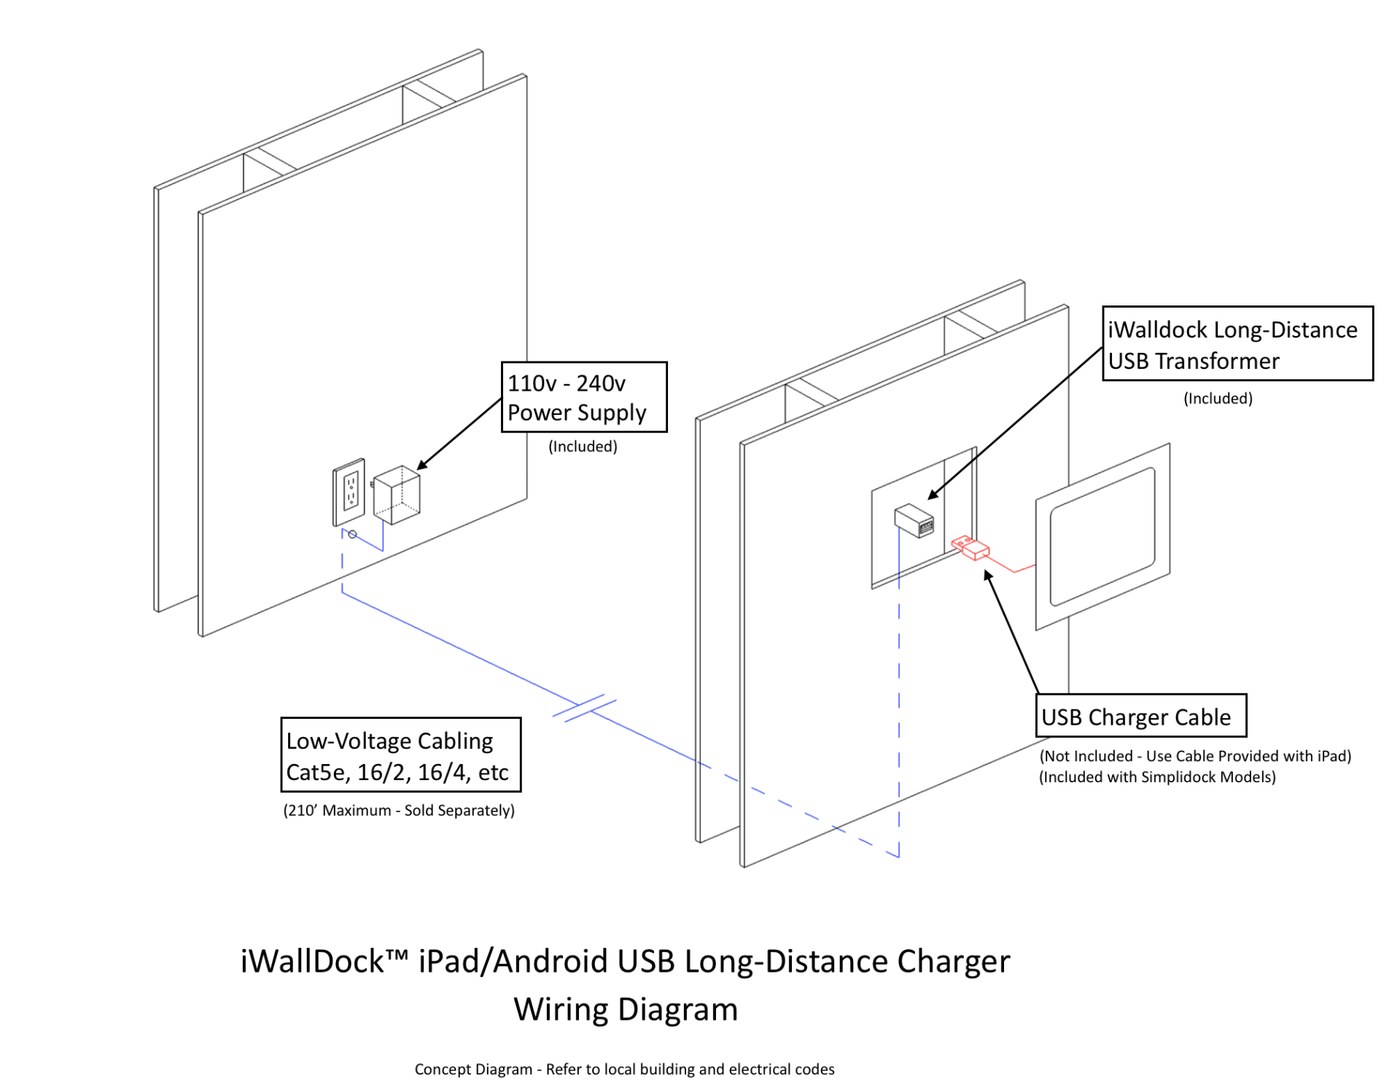 iWalldock™ 2-Wire USB Charging Kit In-Wall Tablet Mount Dock